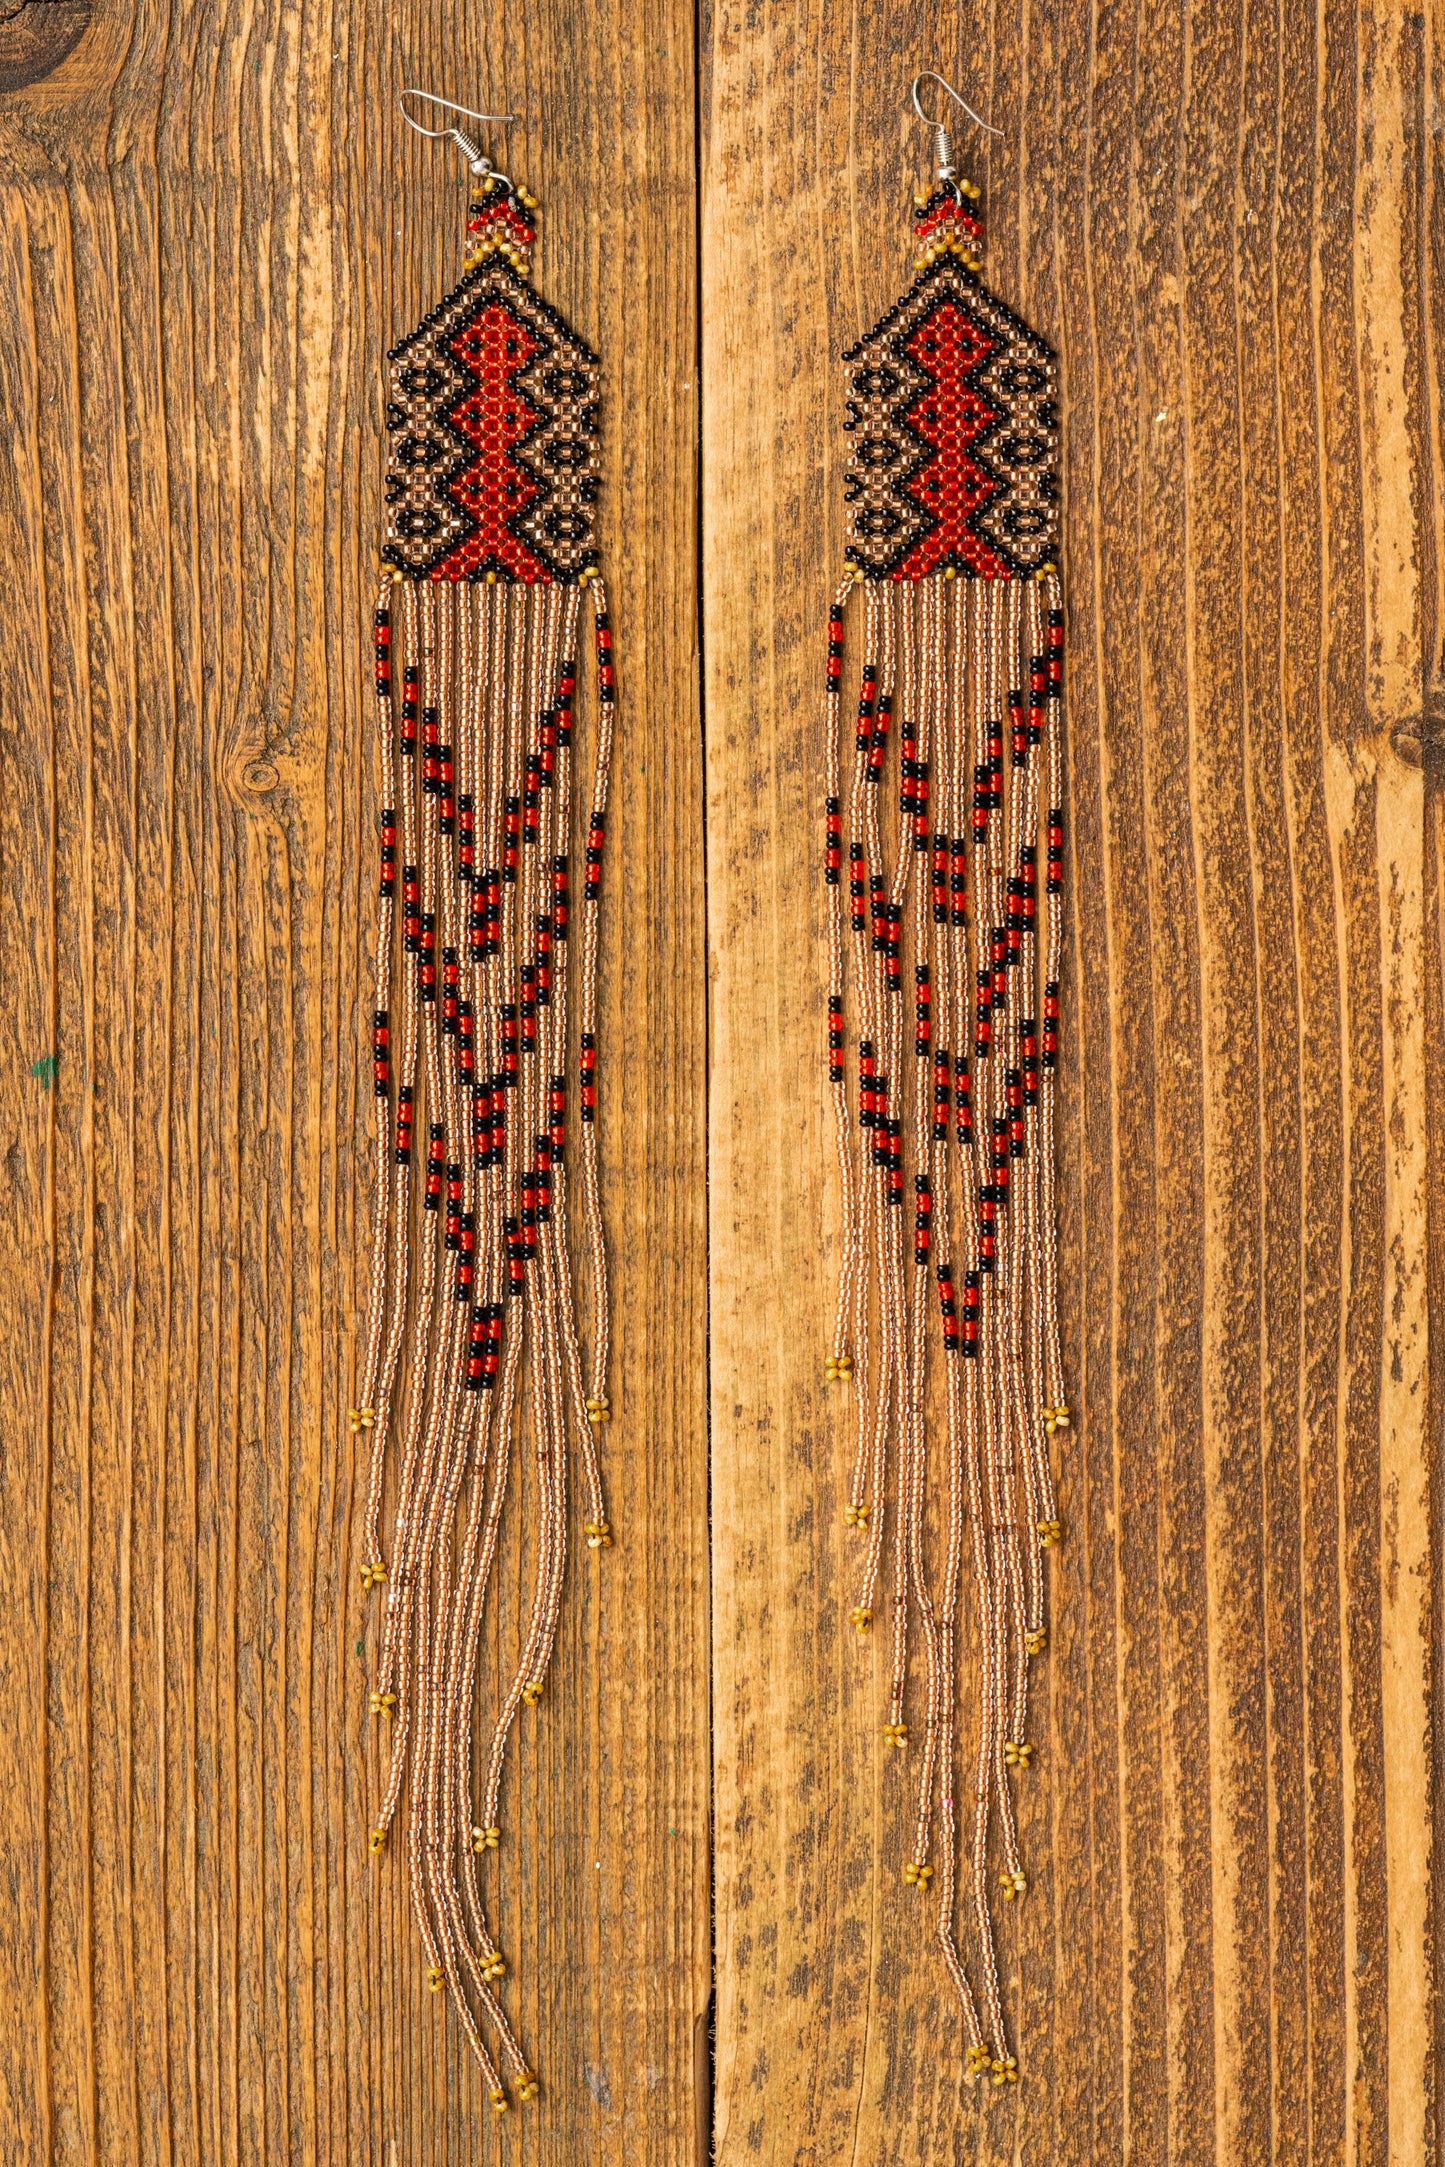 Yawanawa Earrings